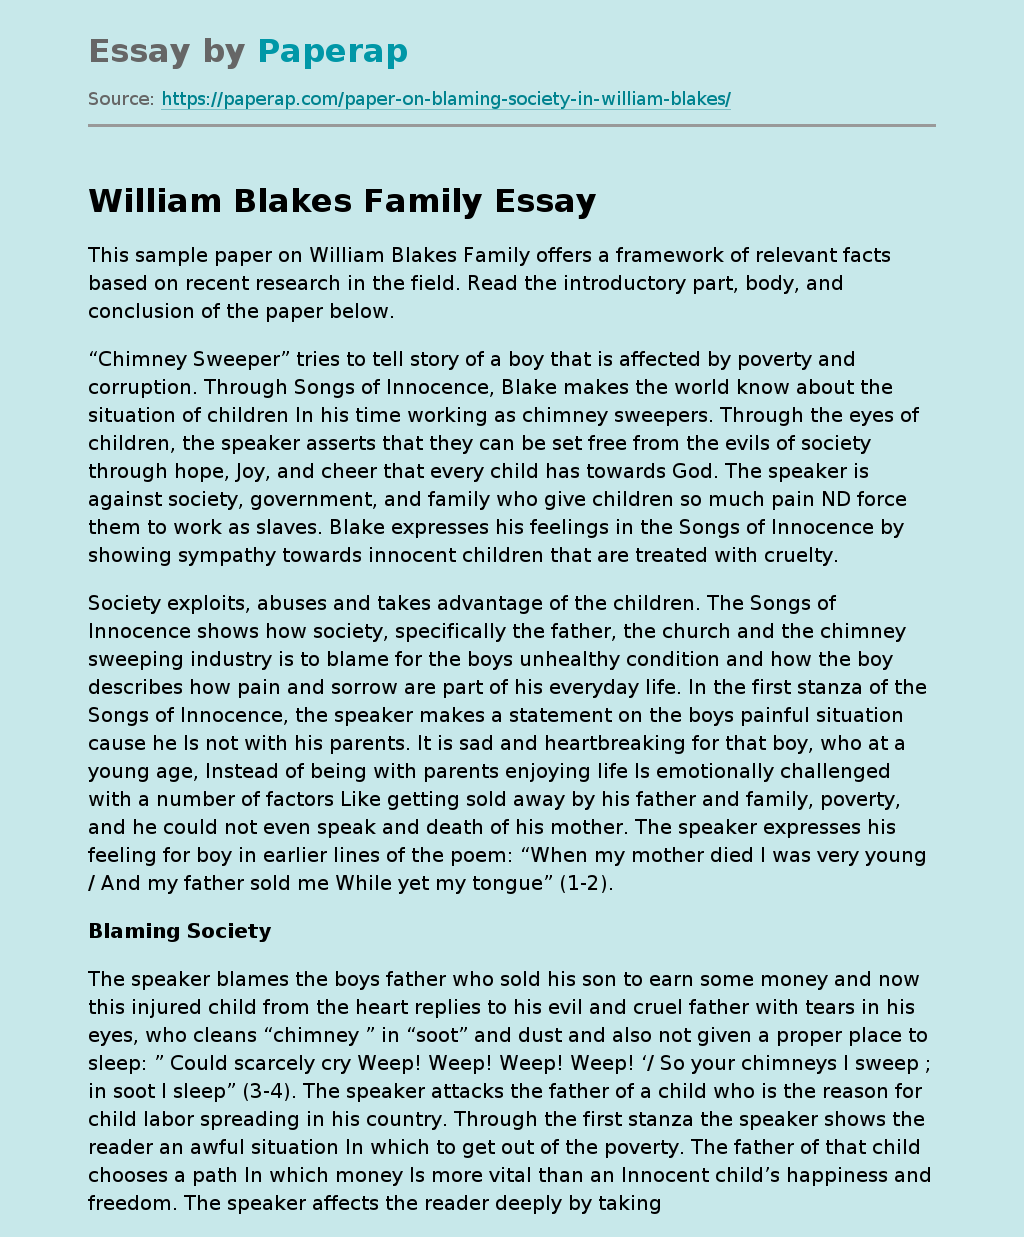 Sample Paper on William Blakes Family